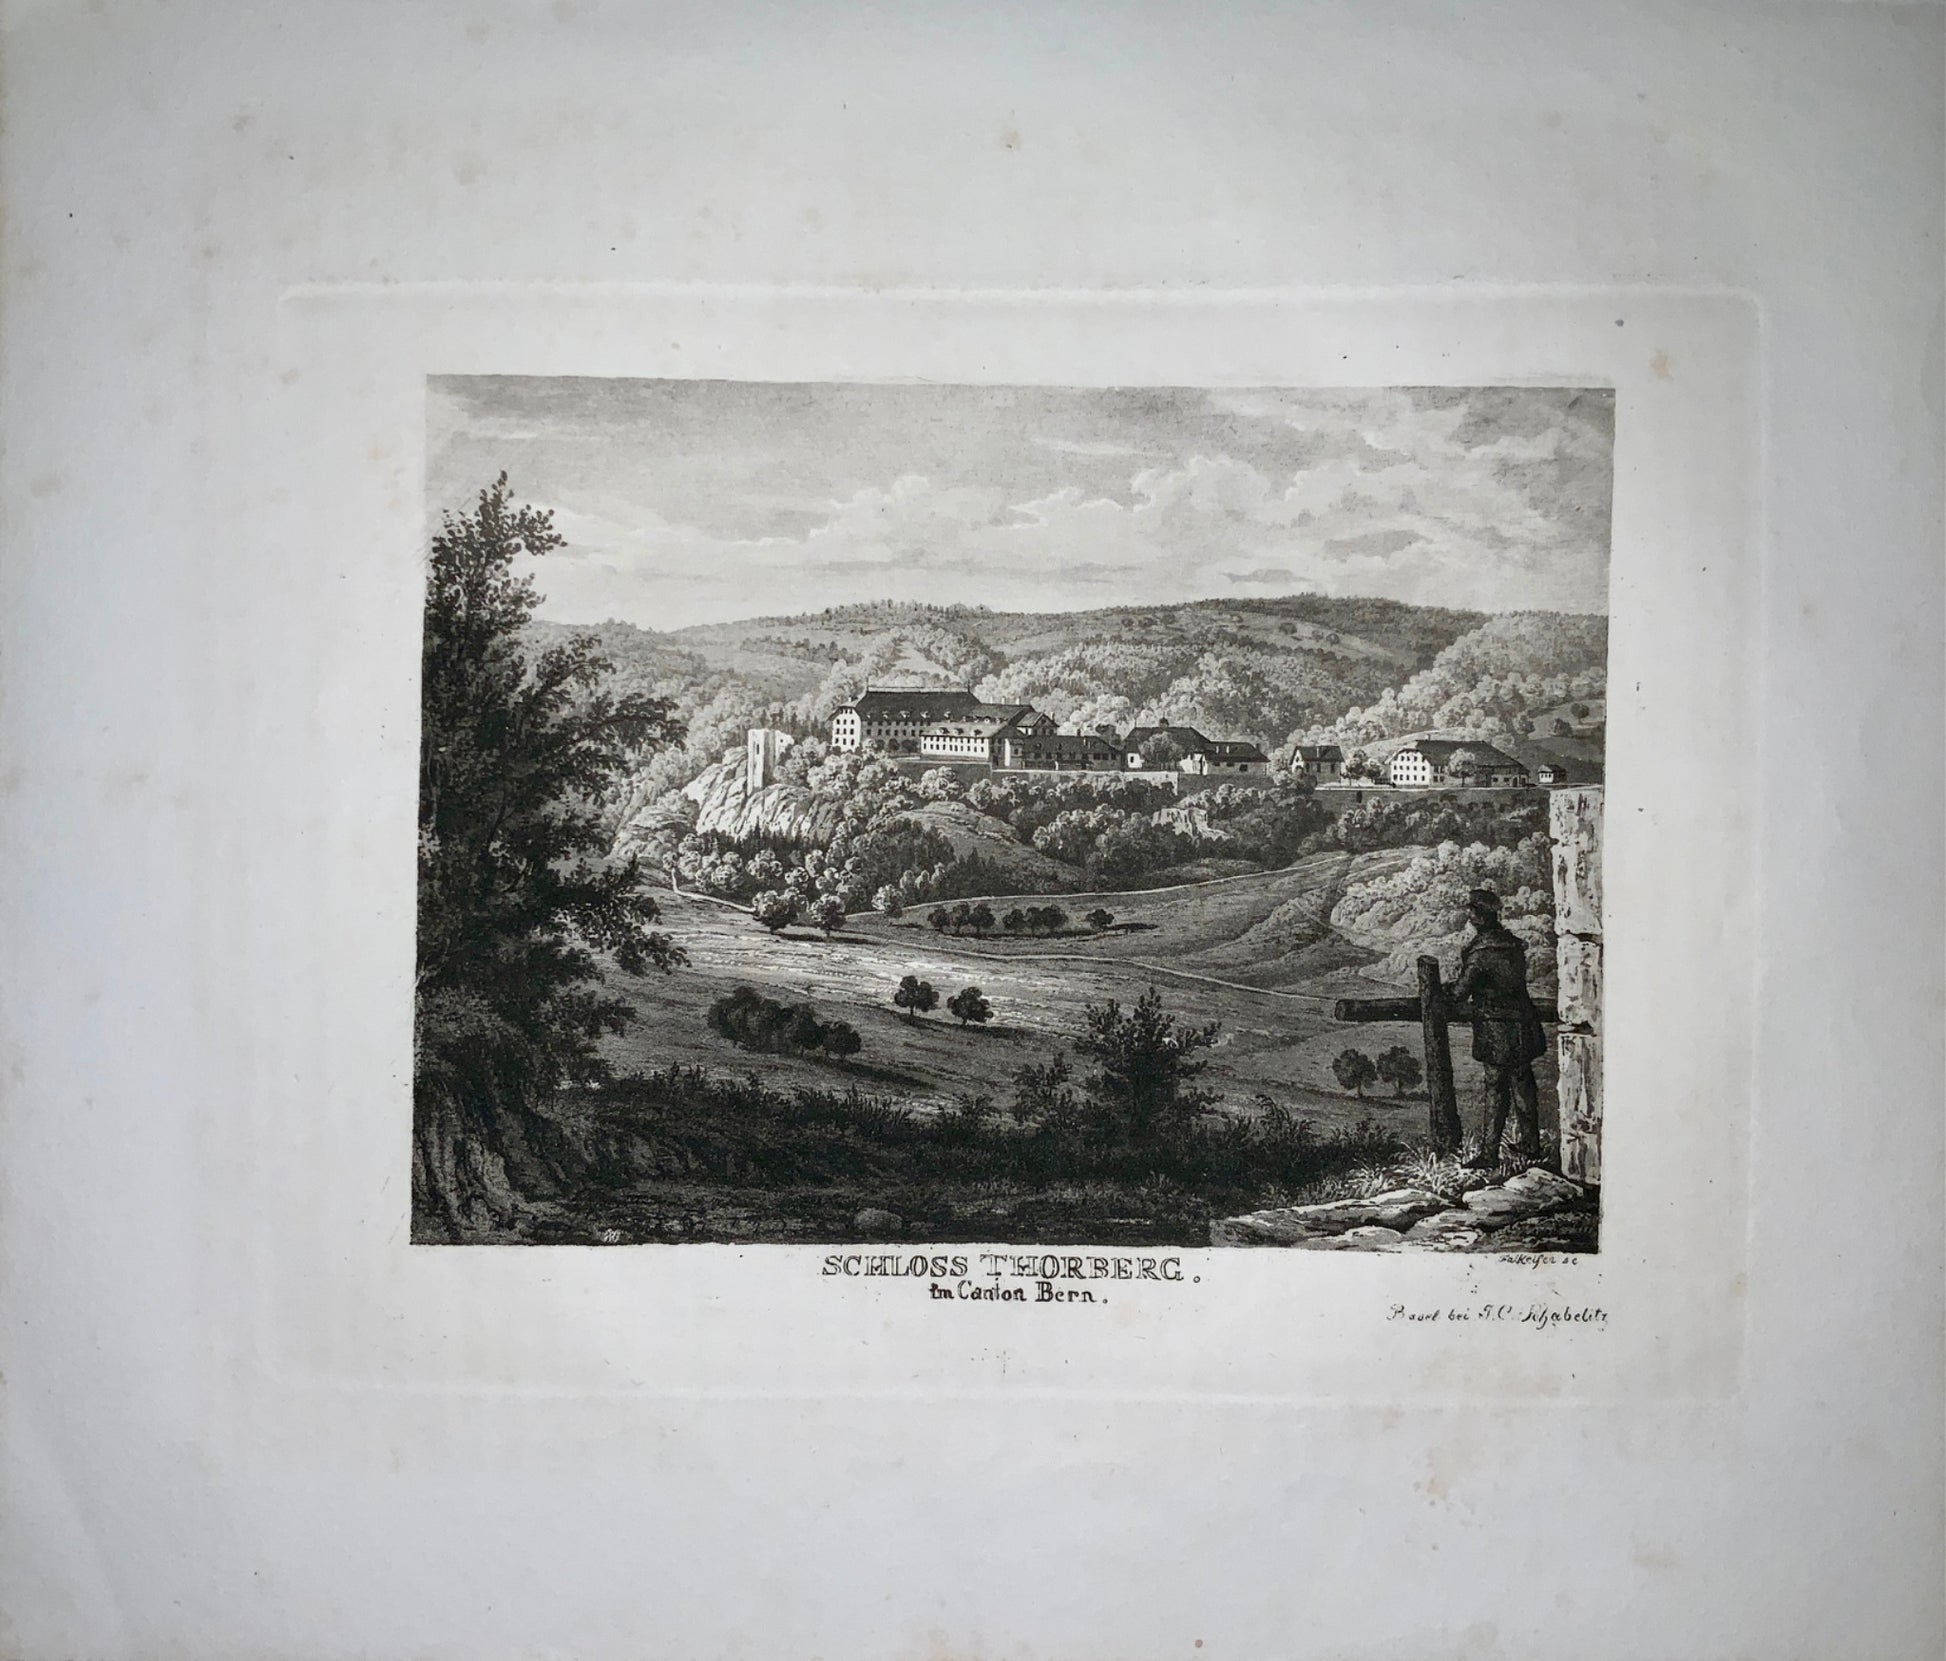 1820 Falkeisen; Schabelitz - Krauchthal Bern - Aquatint - Switzerland